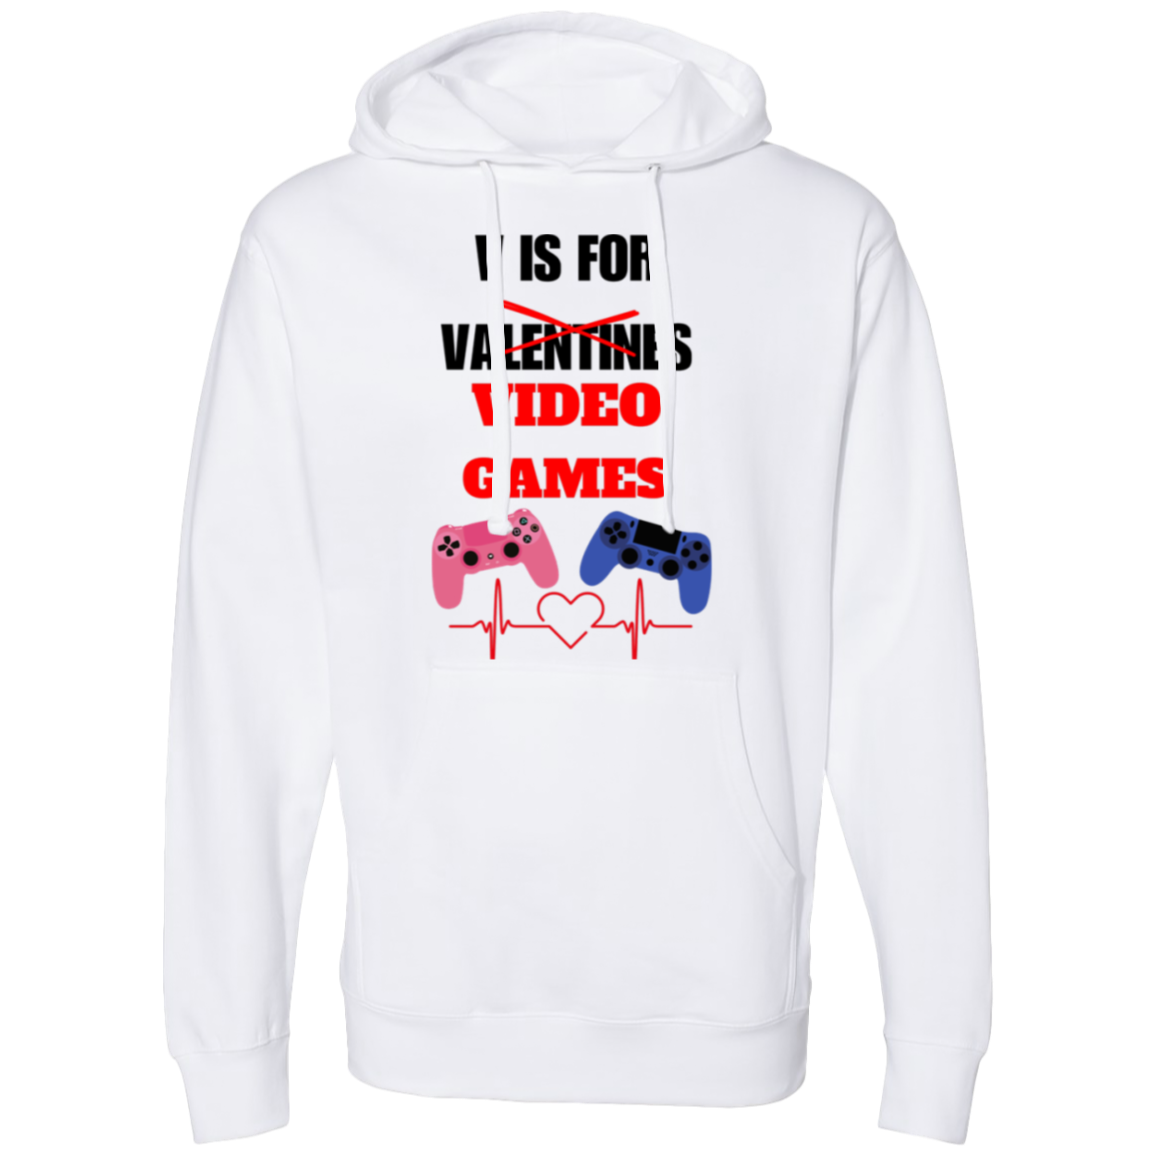 V IS FOR VALENTINE Hooded Sweatshirt